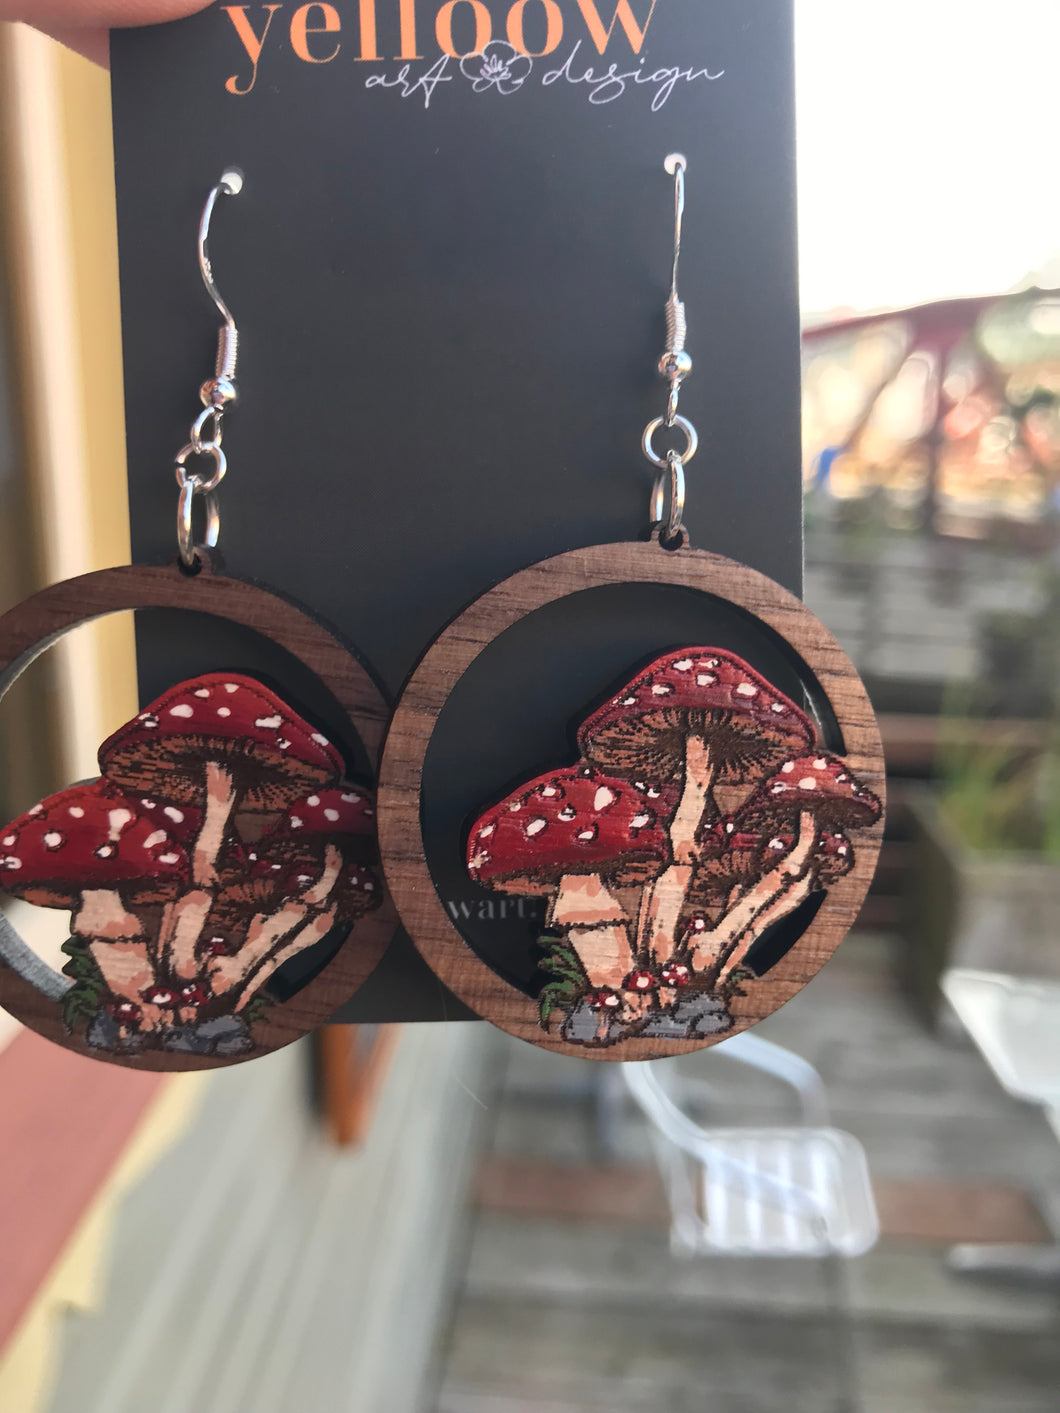 Yelloow Art Earrings- magic mushroom (Fly Agaric)